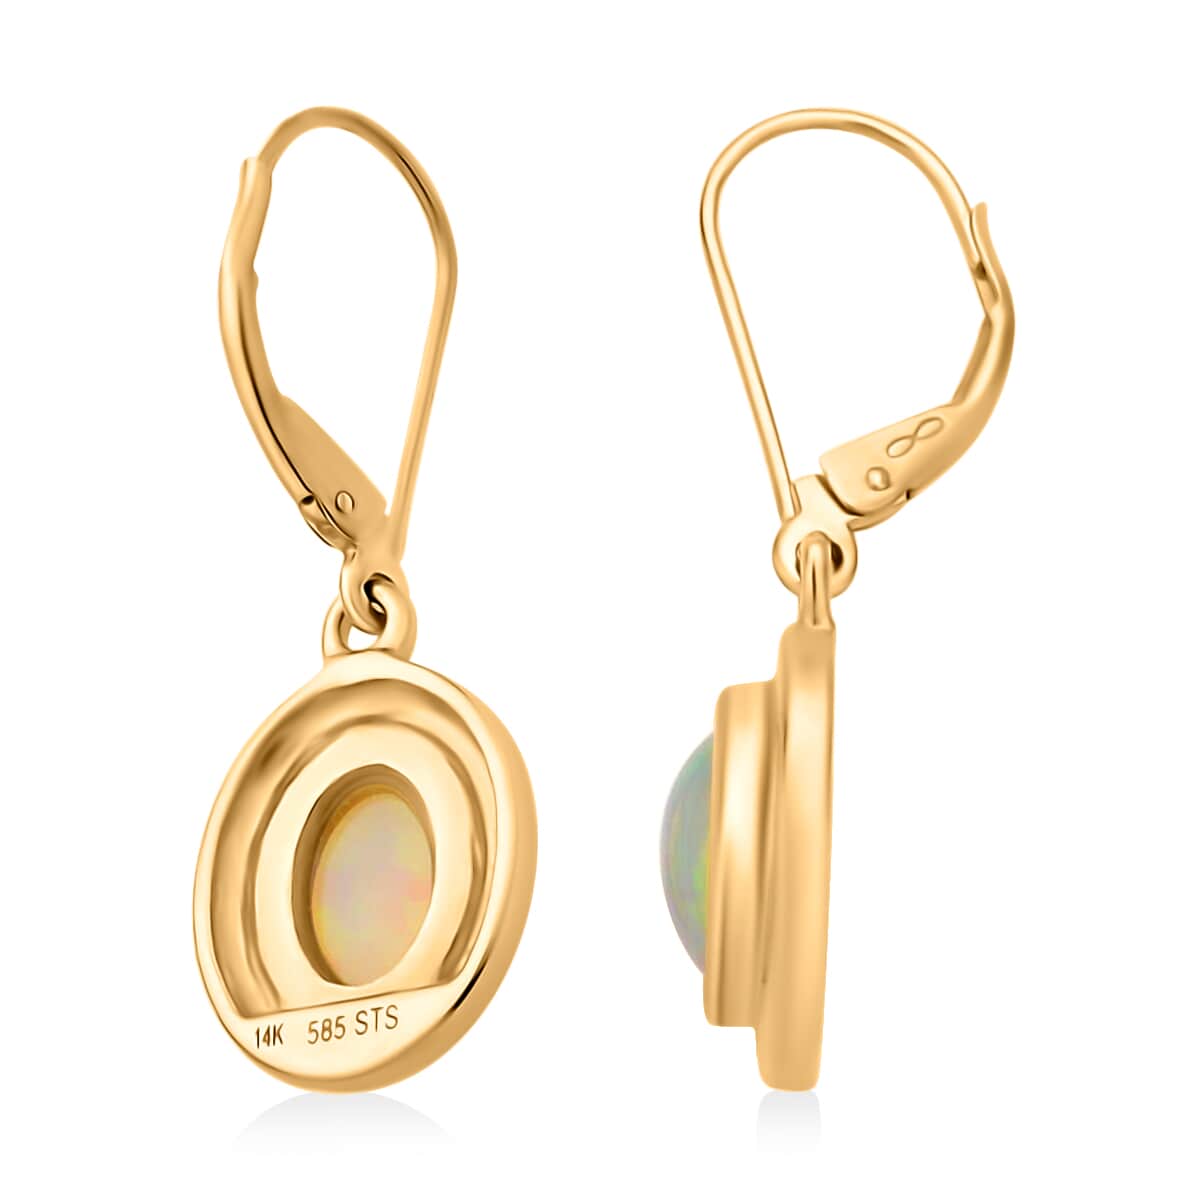 Luxoro Premium Ethiopian Welo Opal Earrings, 14K Yellow Gold Earrings, Opal Dangle Earrings, Gold Dangle Earrings, Gold Gifts For Her 4.25 Grams 1.75 ctw image number 3